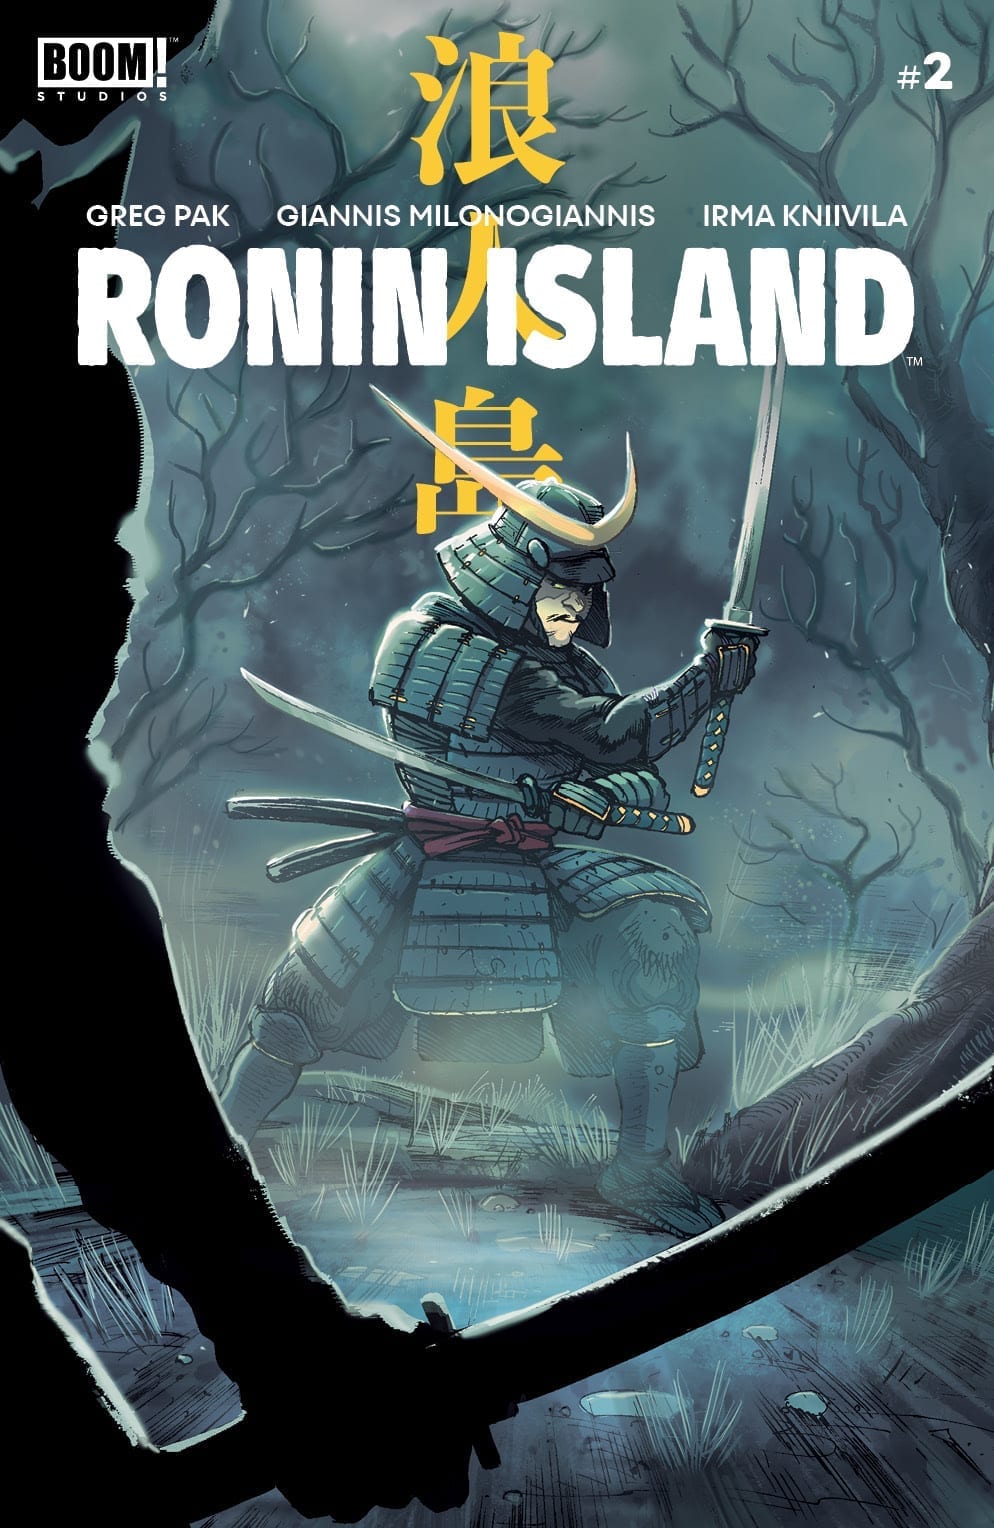 RONIN ISLAND #2 main cover